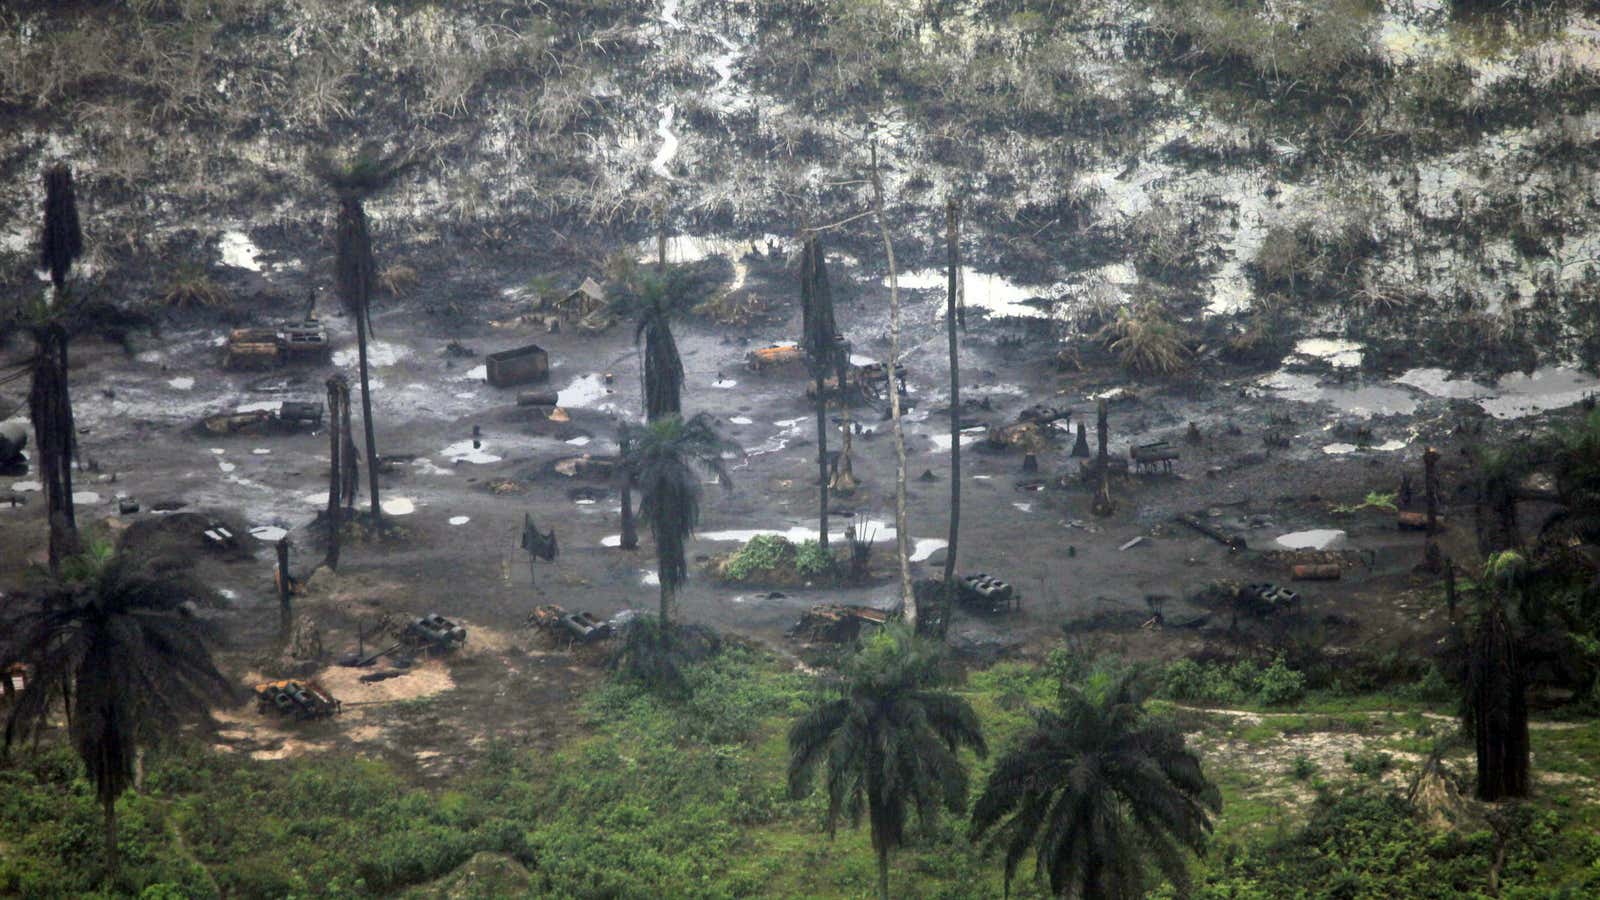 An llegal oil refinery is seen in Nigeria’s Ogoniland in 2011